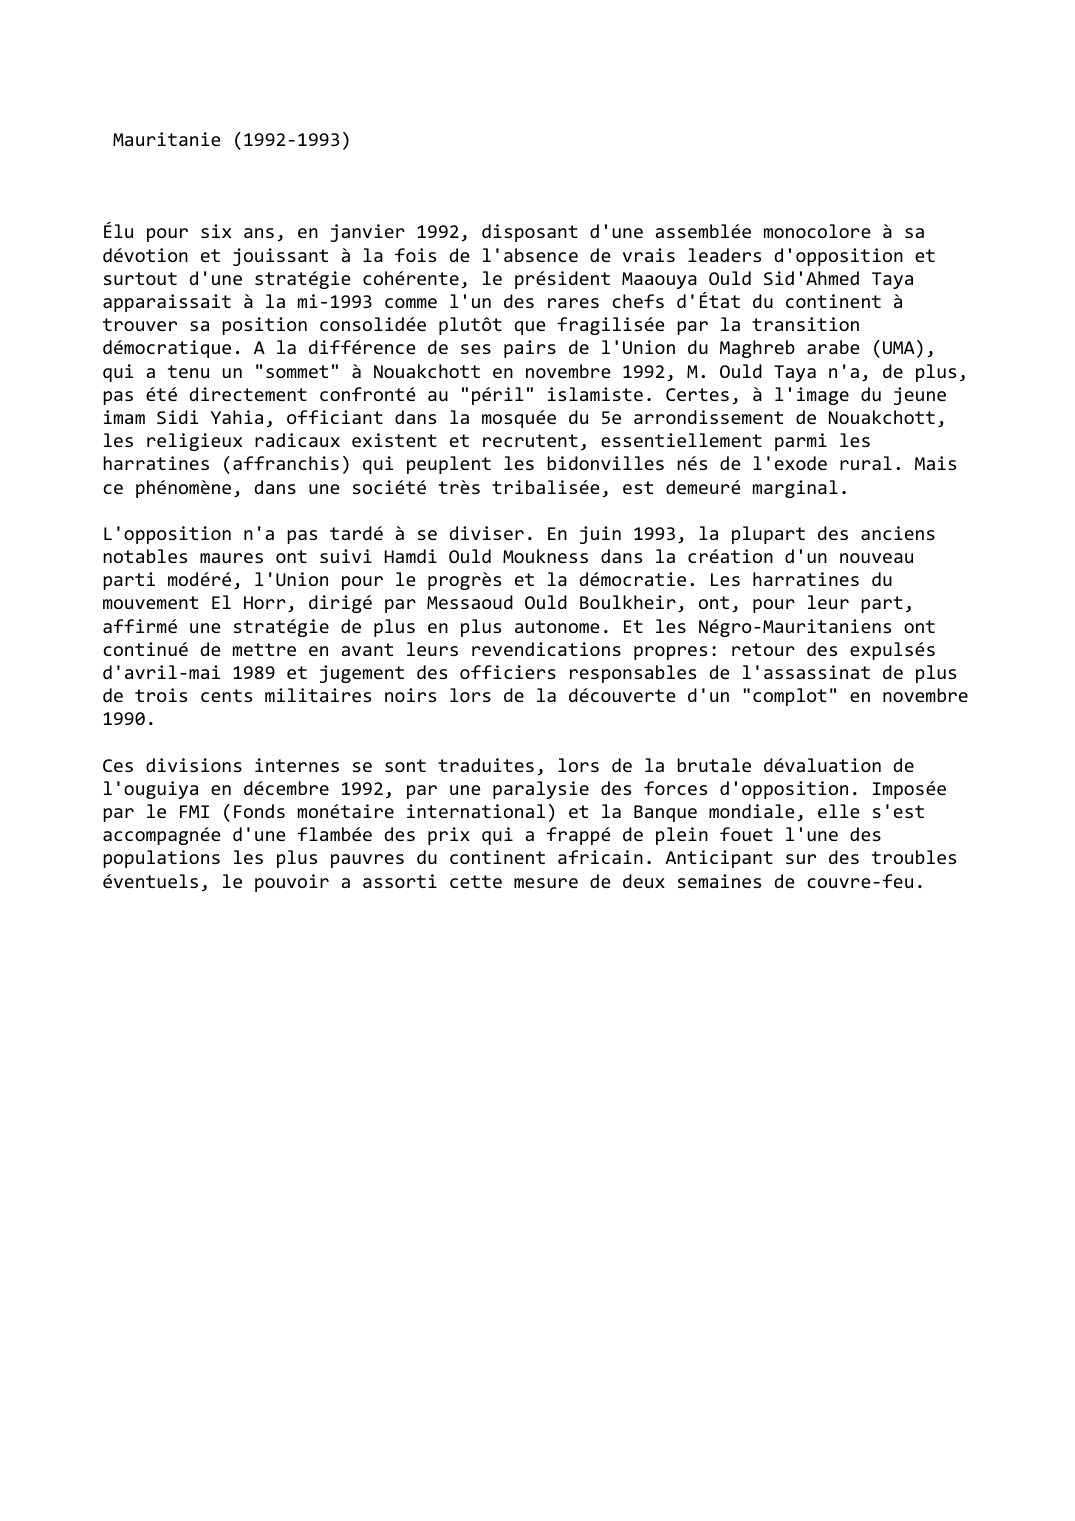 Prévisualisation du document Mauritanie (1992-1993)